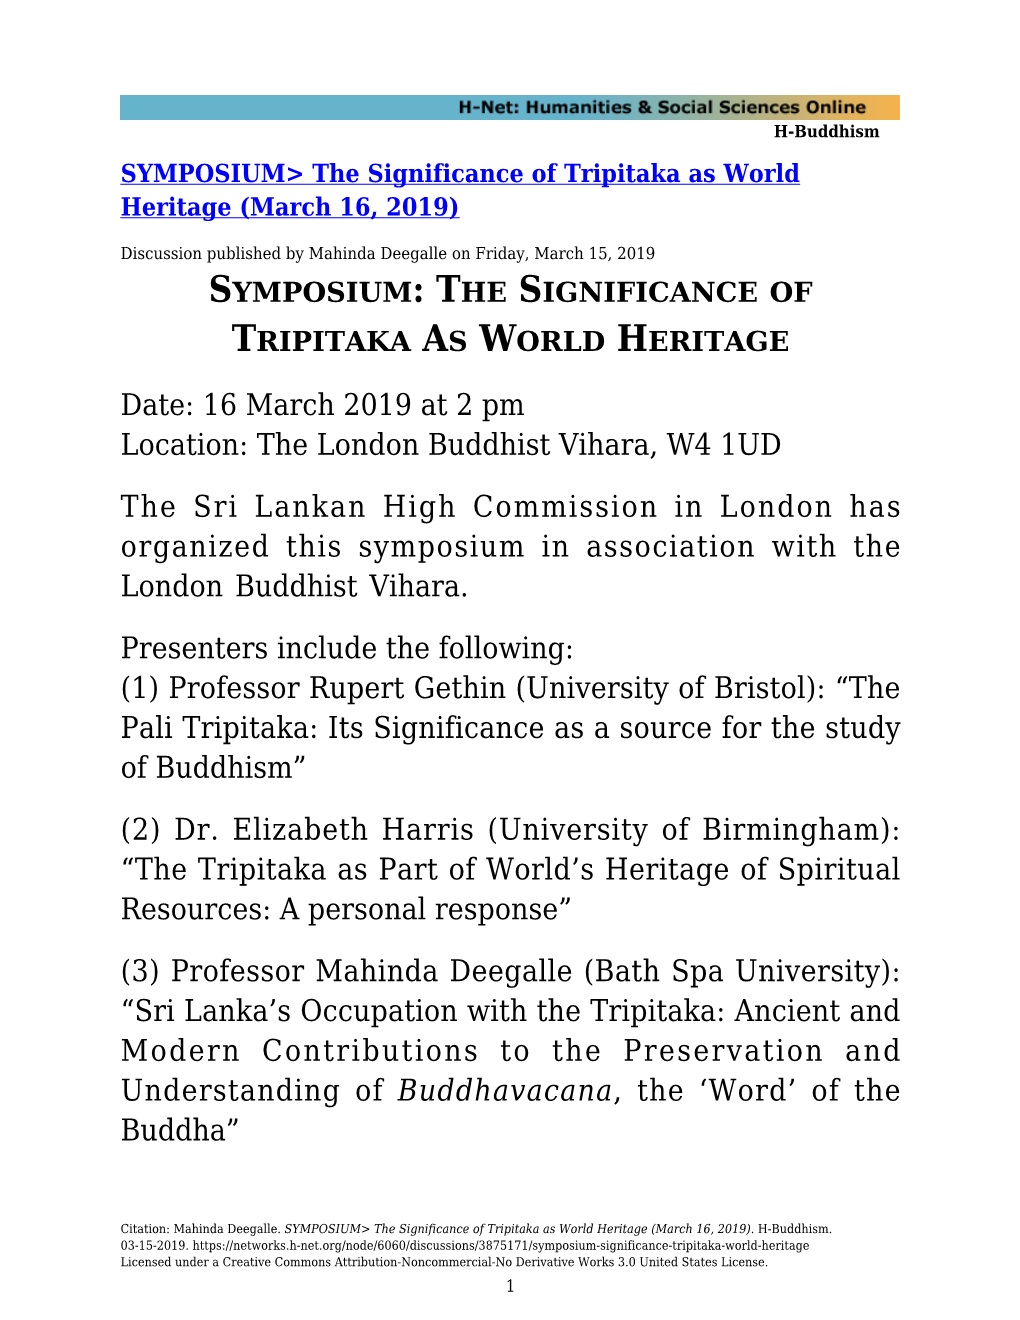 The London Buddhist Vihara, W4 1UD the Sri Lankan High Commission